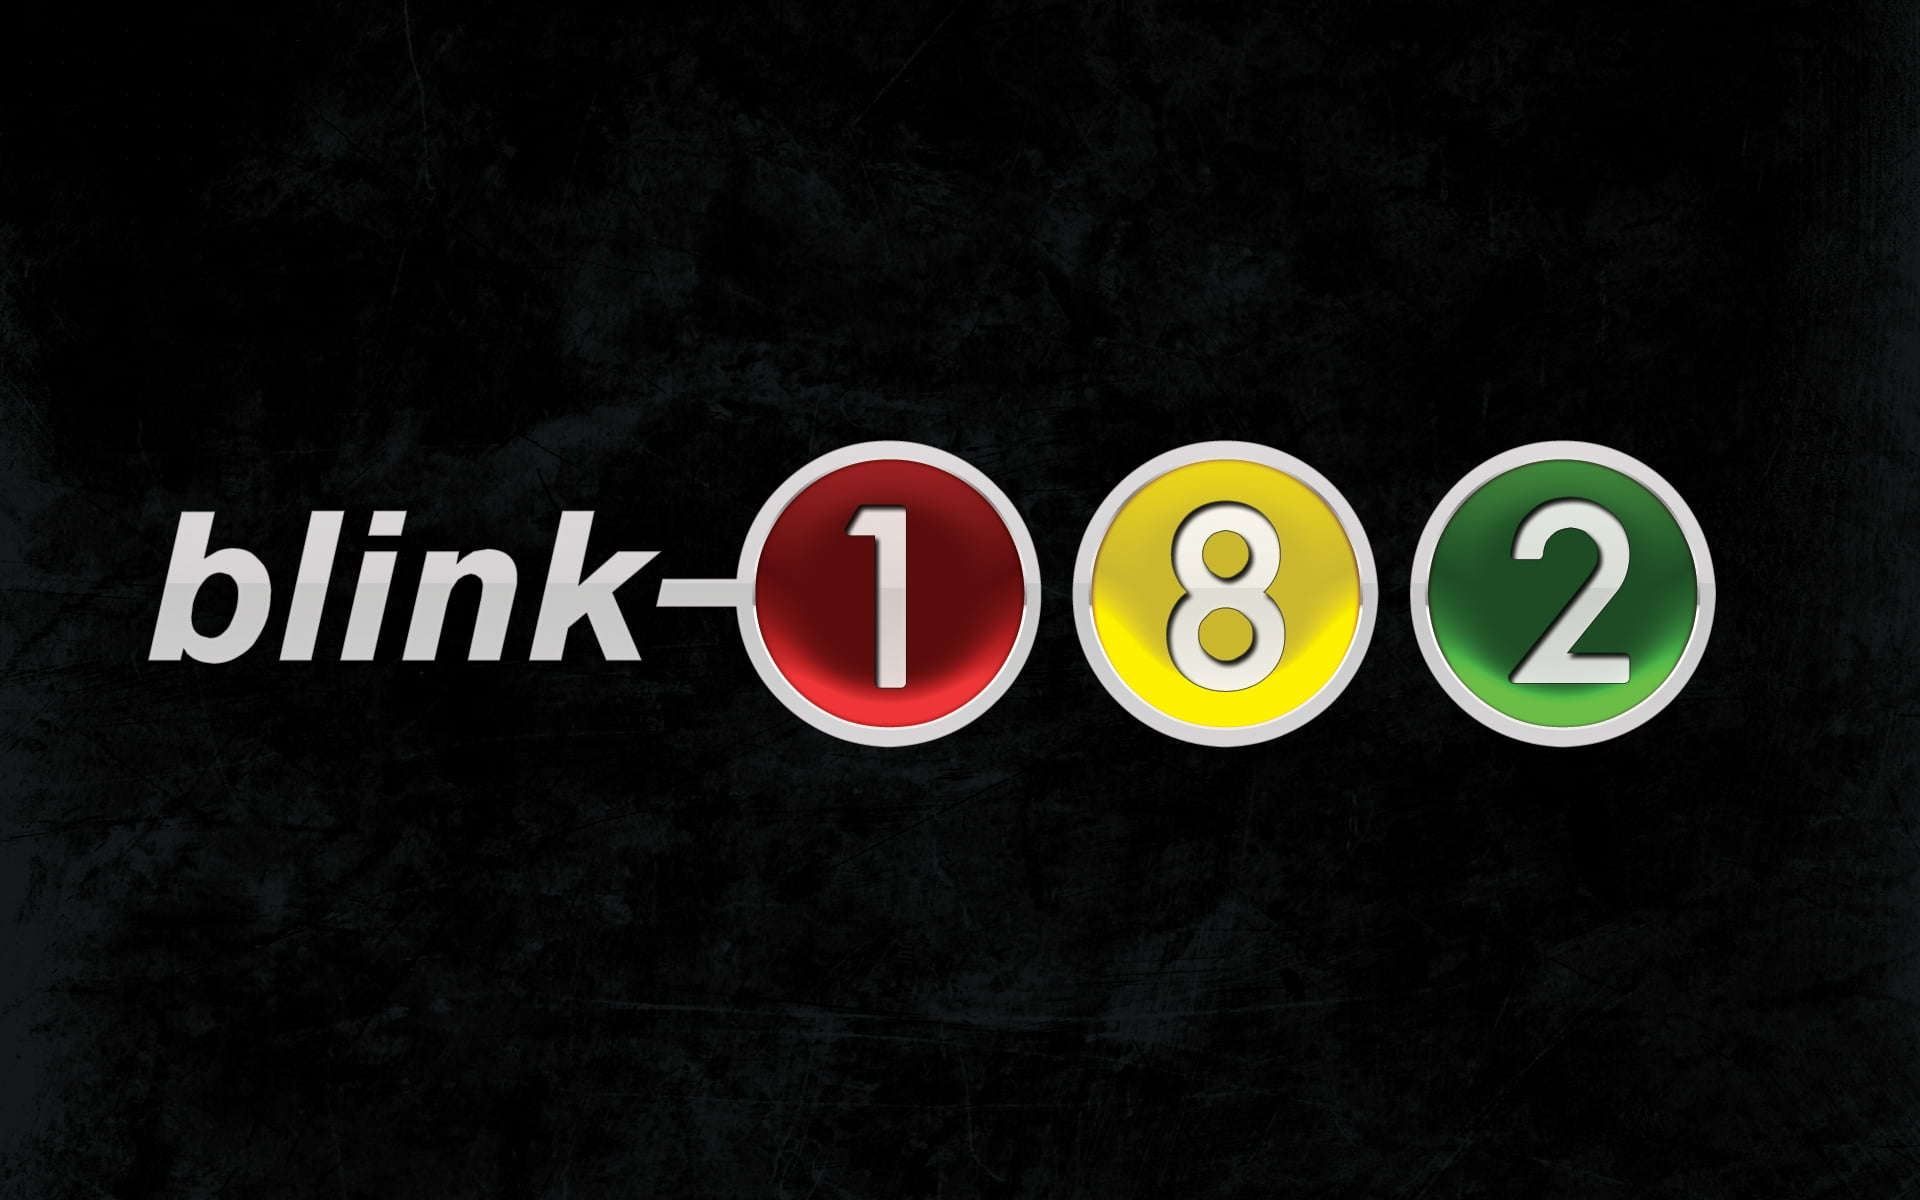 Blink-182,  Letters,  Figures,  Colors